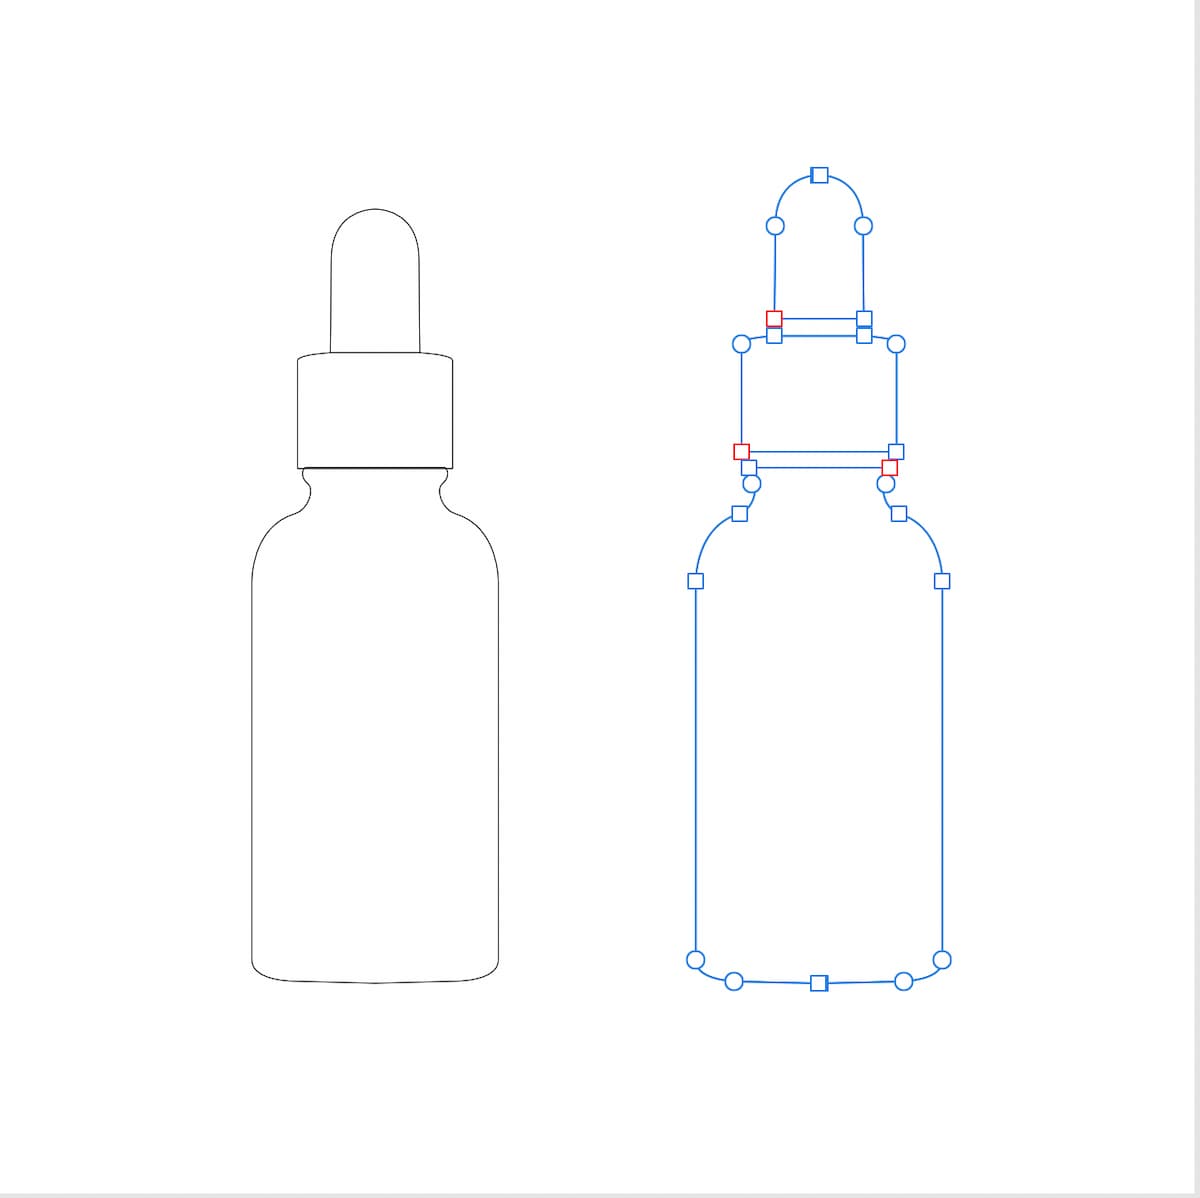 Outline of the bottle